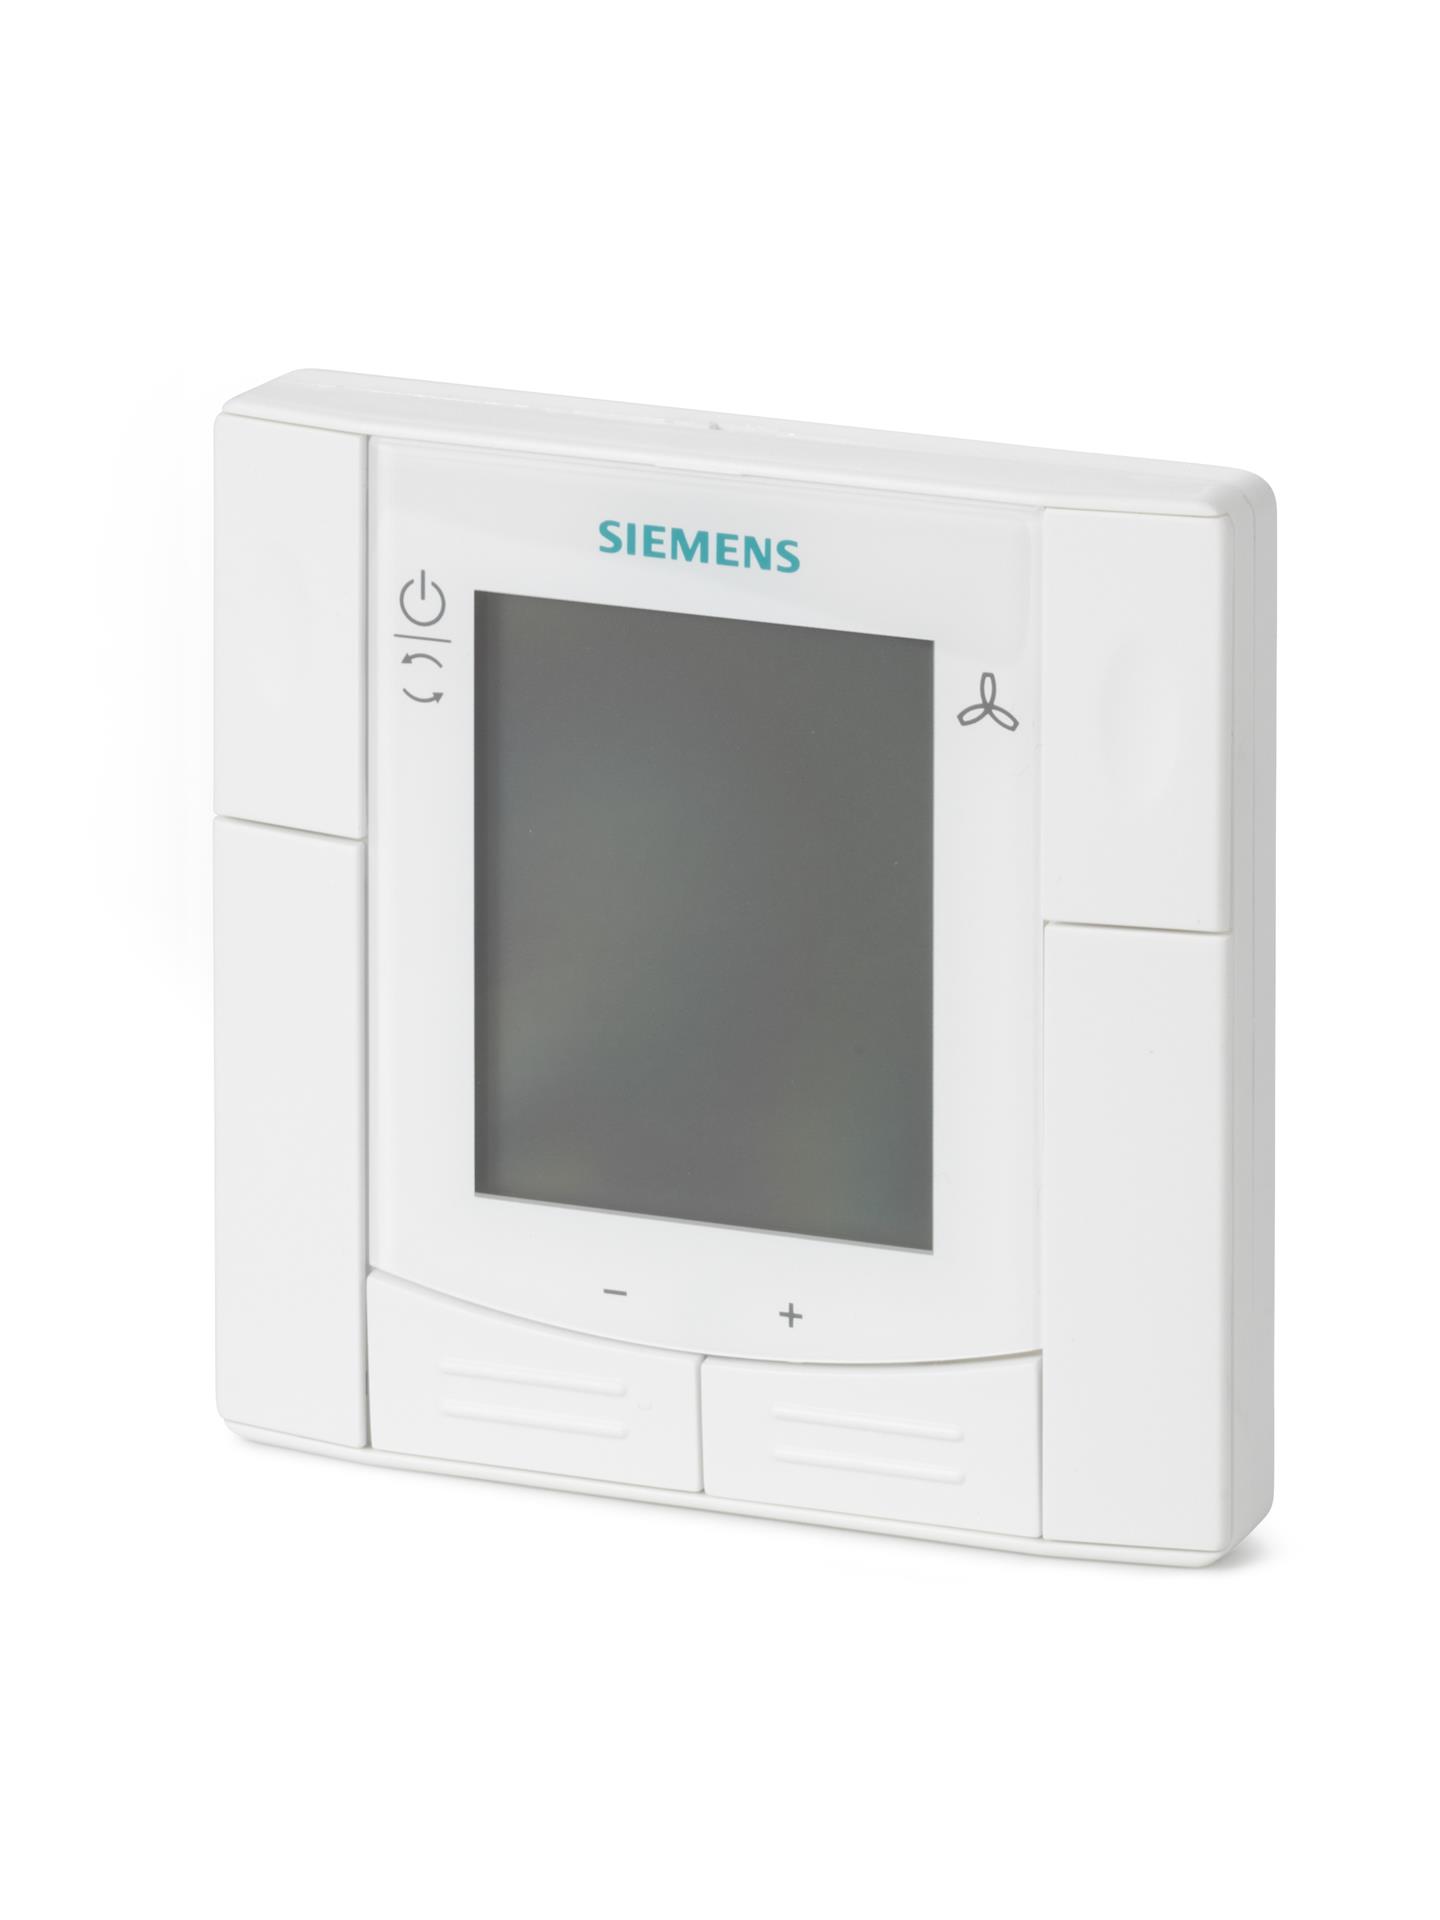 Siemens Thermostats – Castle AC – HVAC, Refrigeration equipments